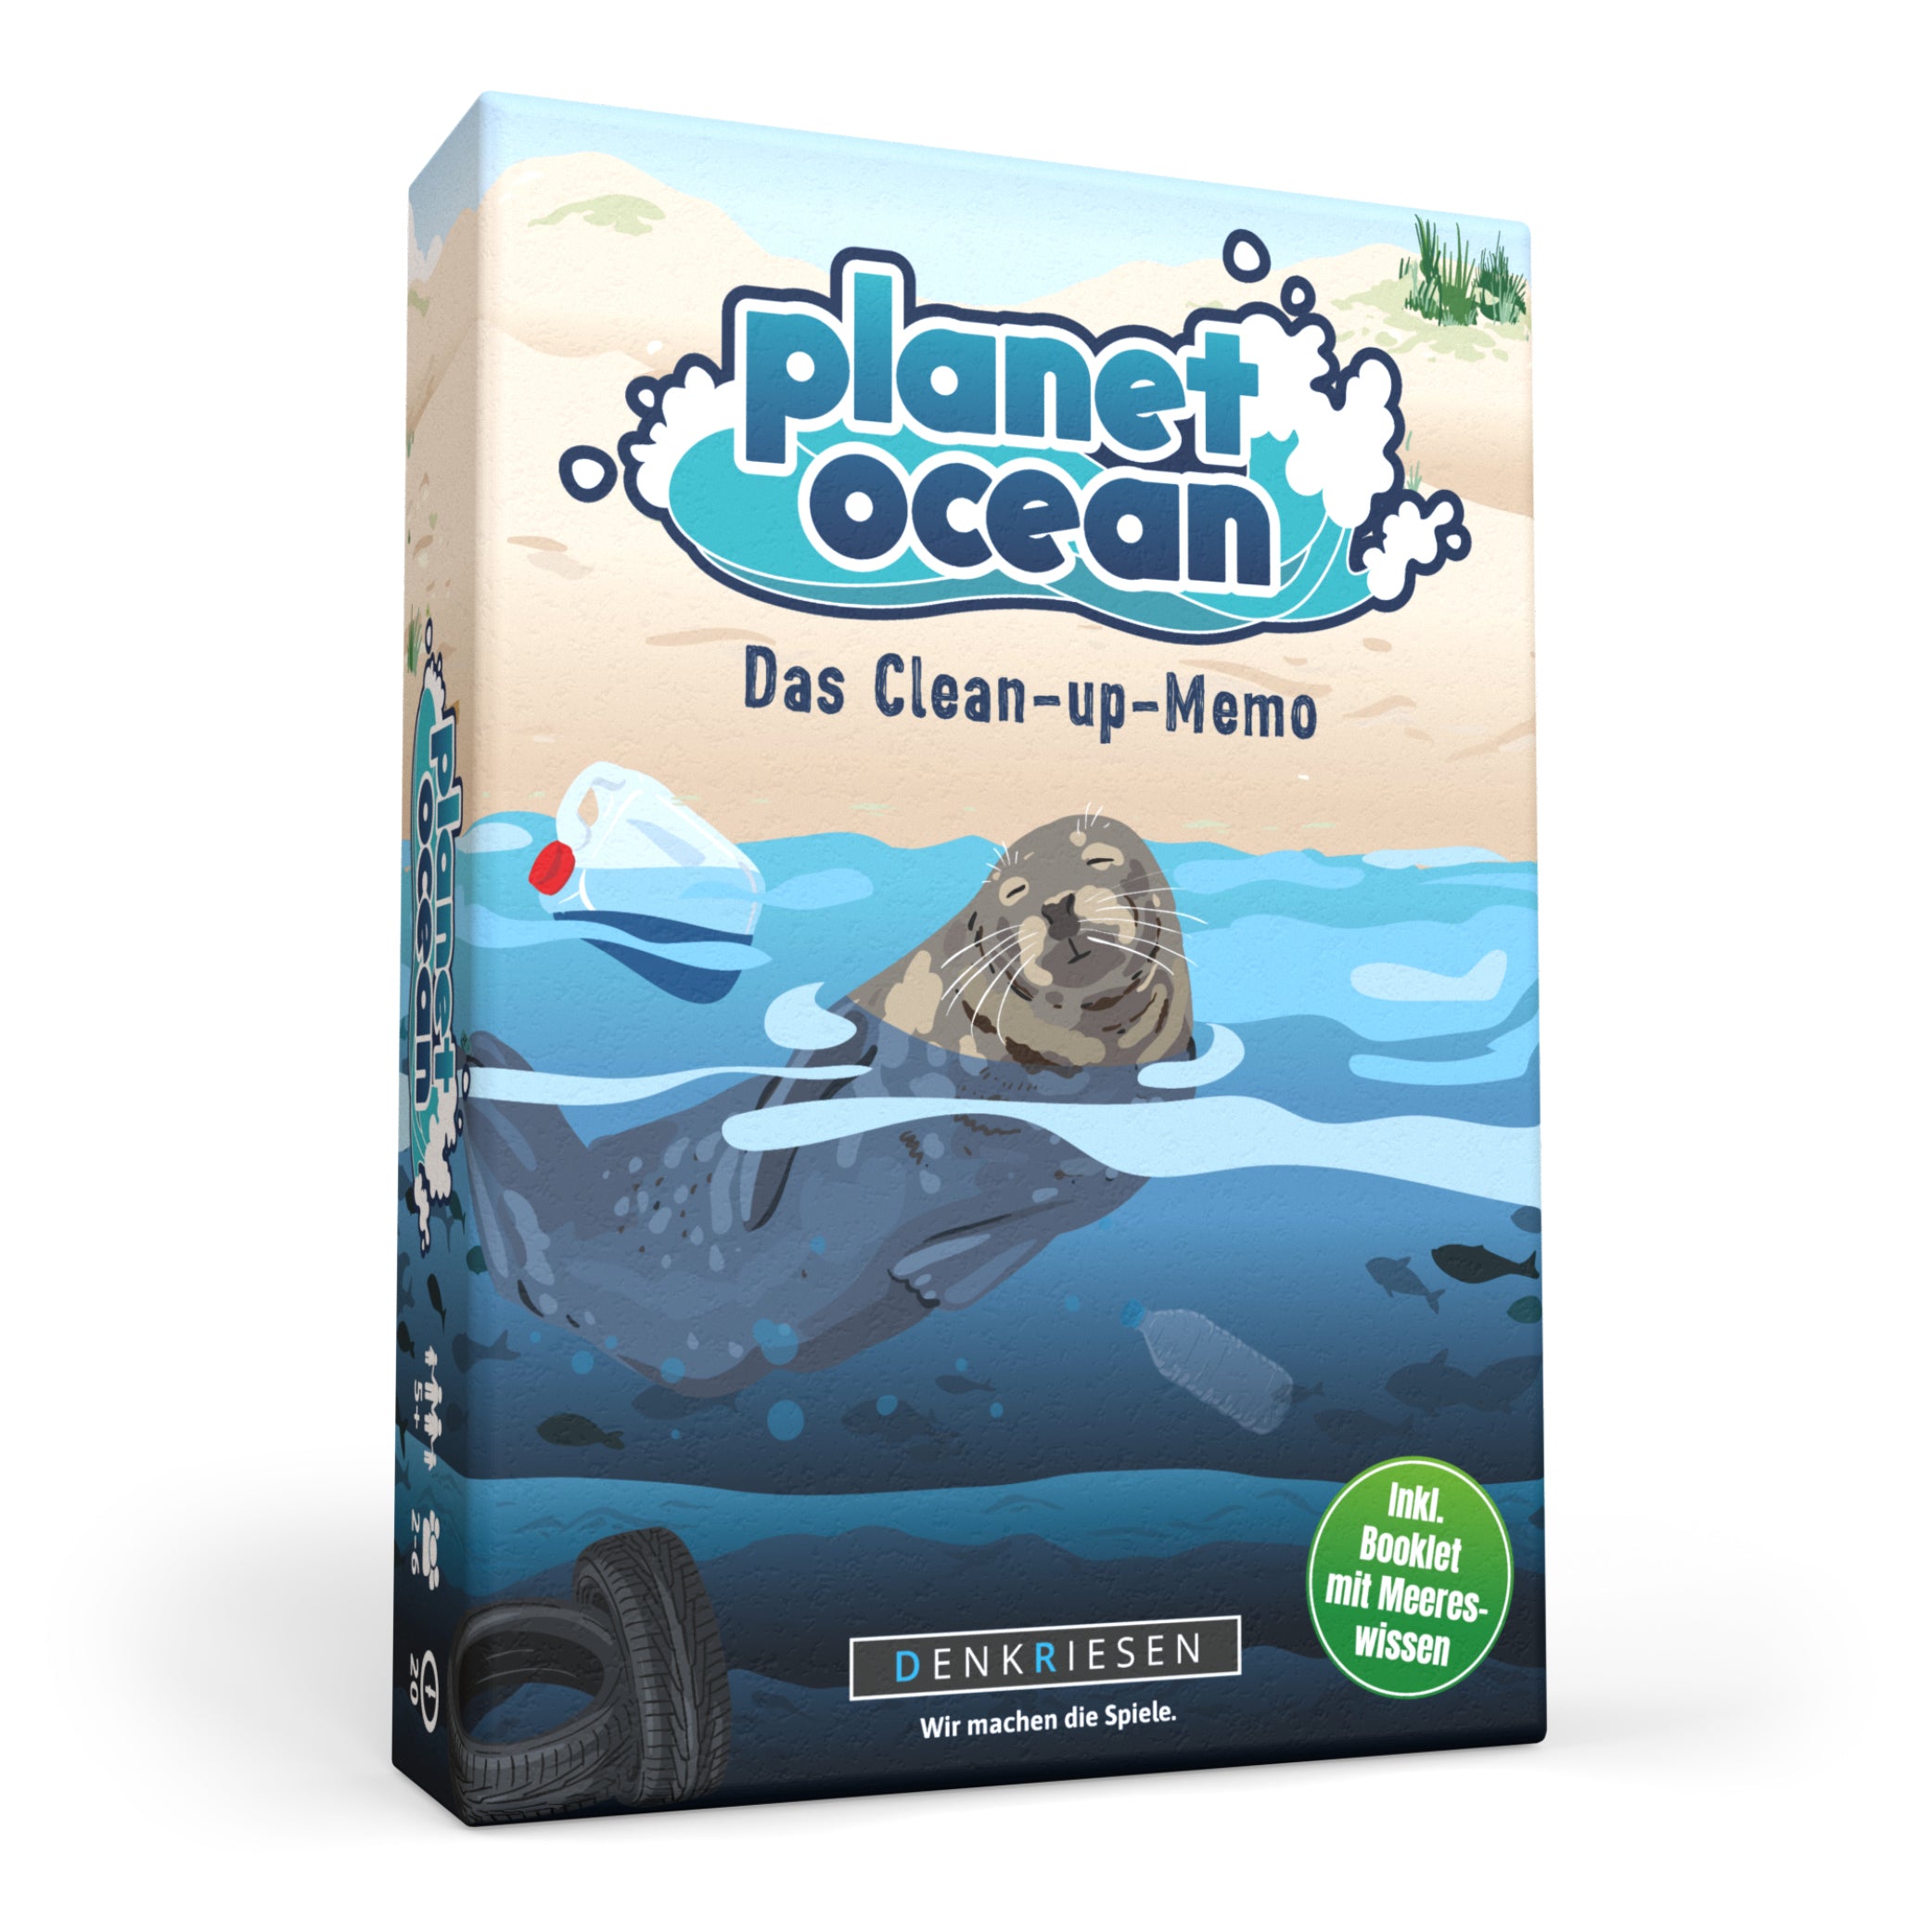 Planet Ocean – "Das Clean-up-Memo."